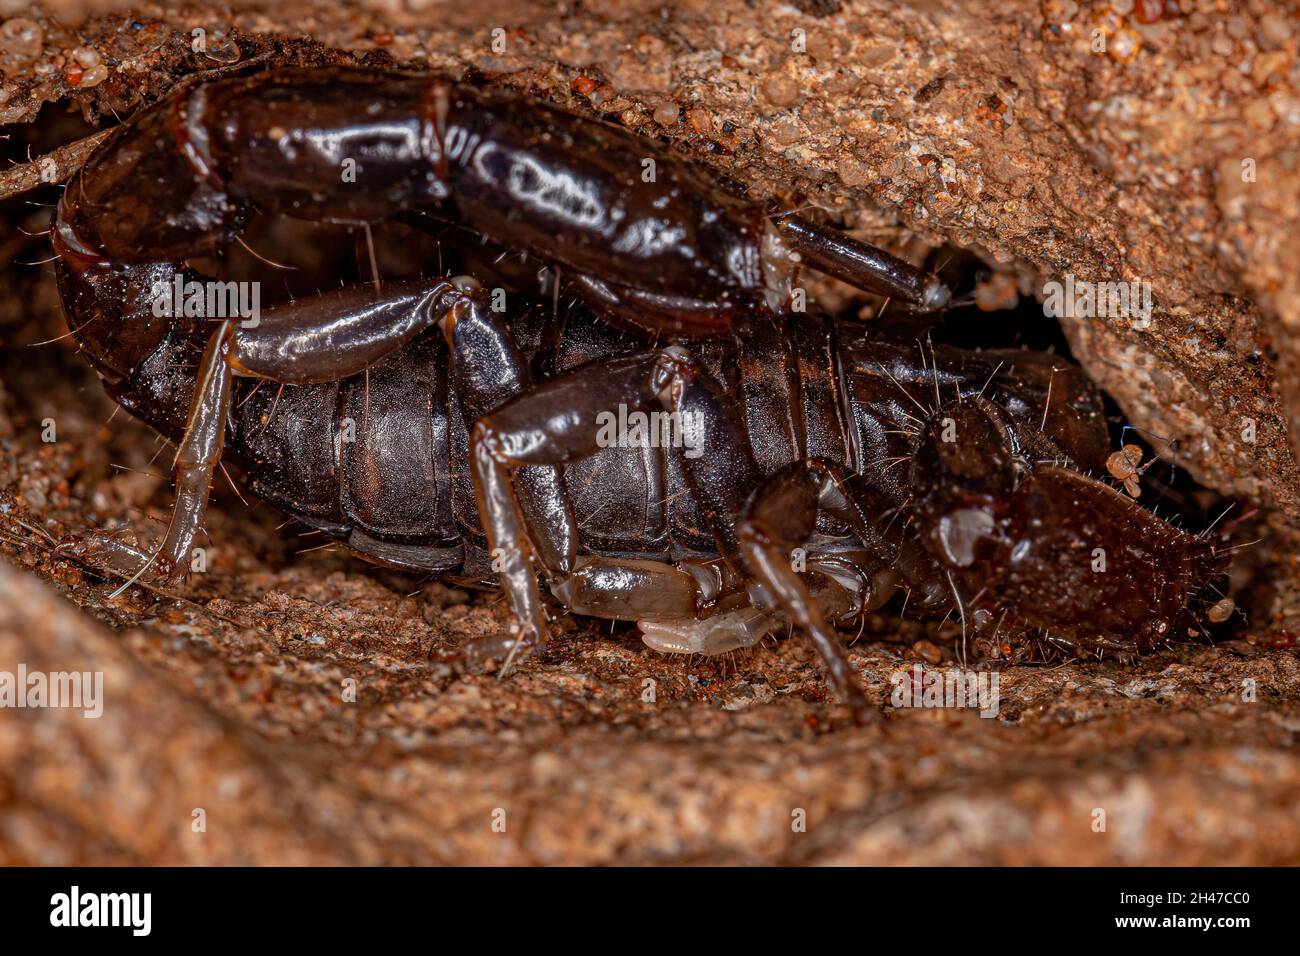 Adult Black Scorpion of the Genus Bothriurus Stock Photo